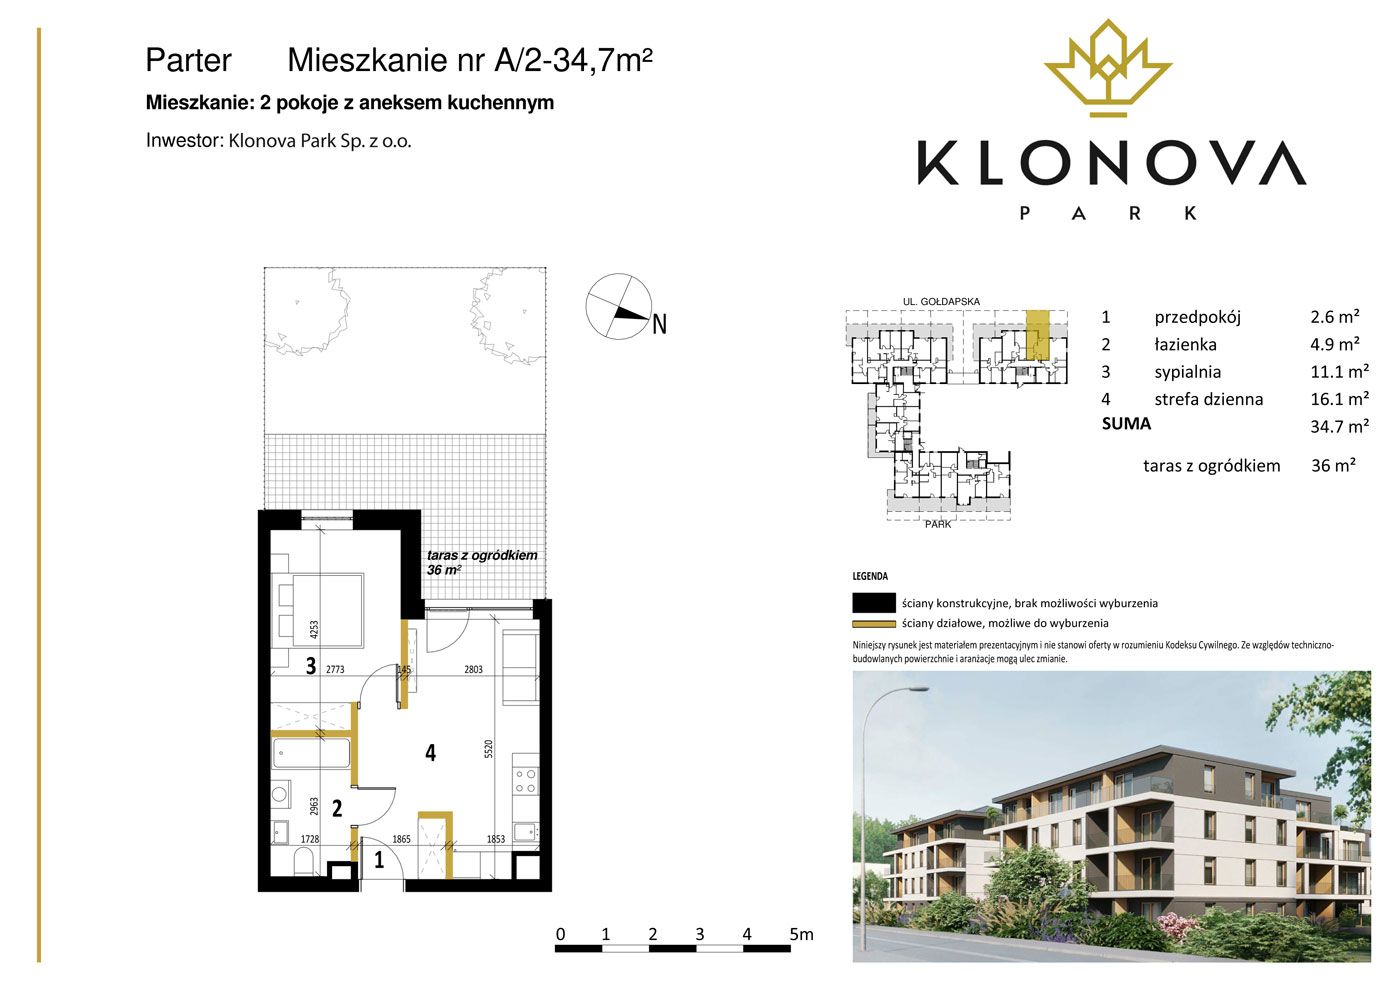 Apartamenty Klonova Park - Plan mieszkania A/2